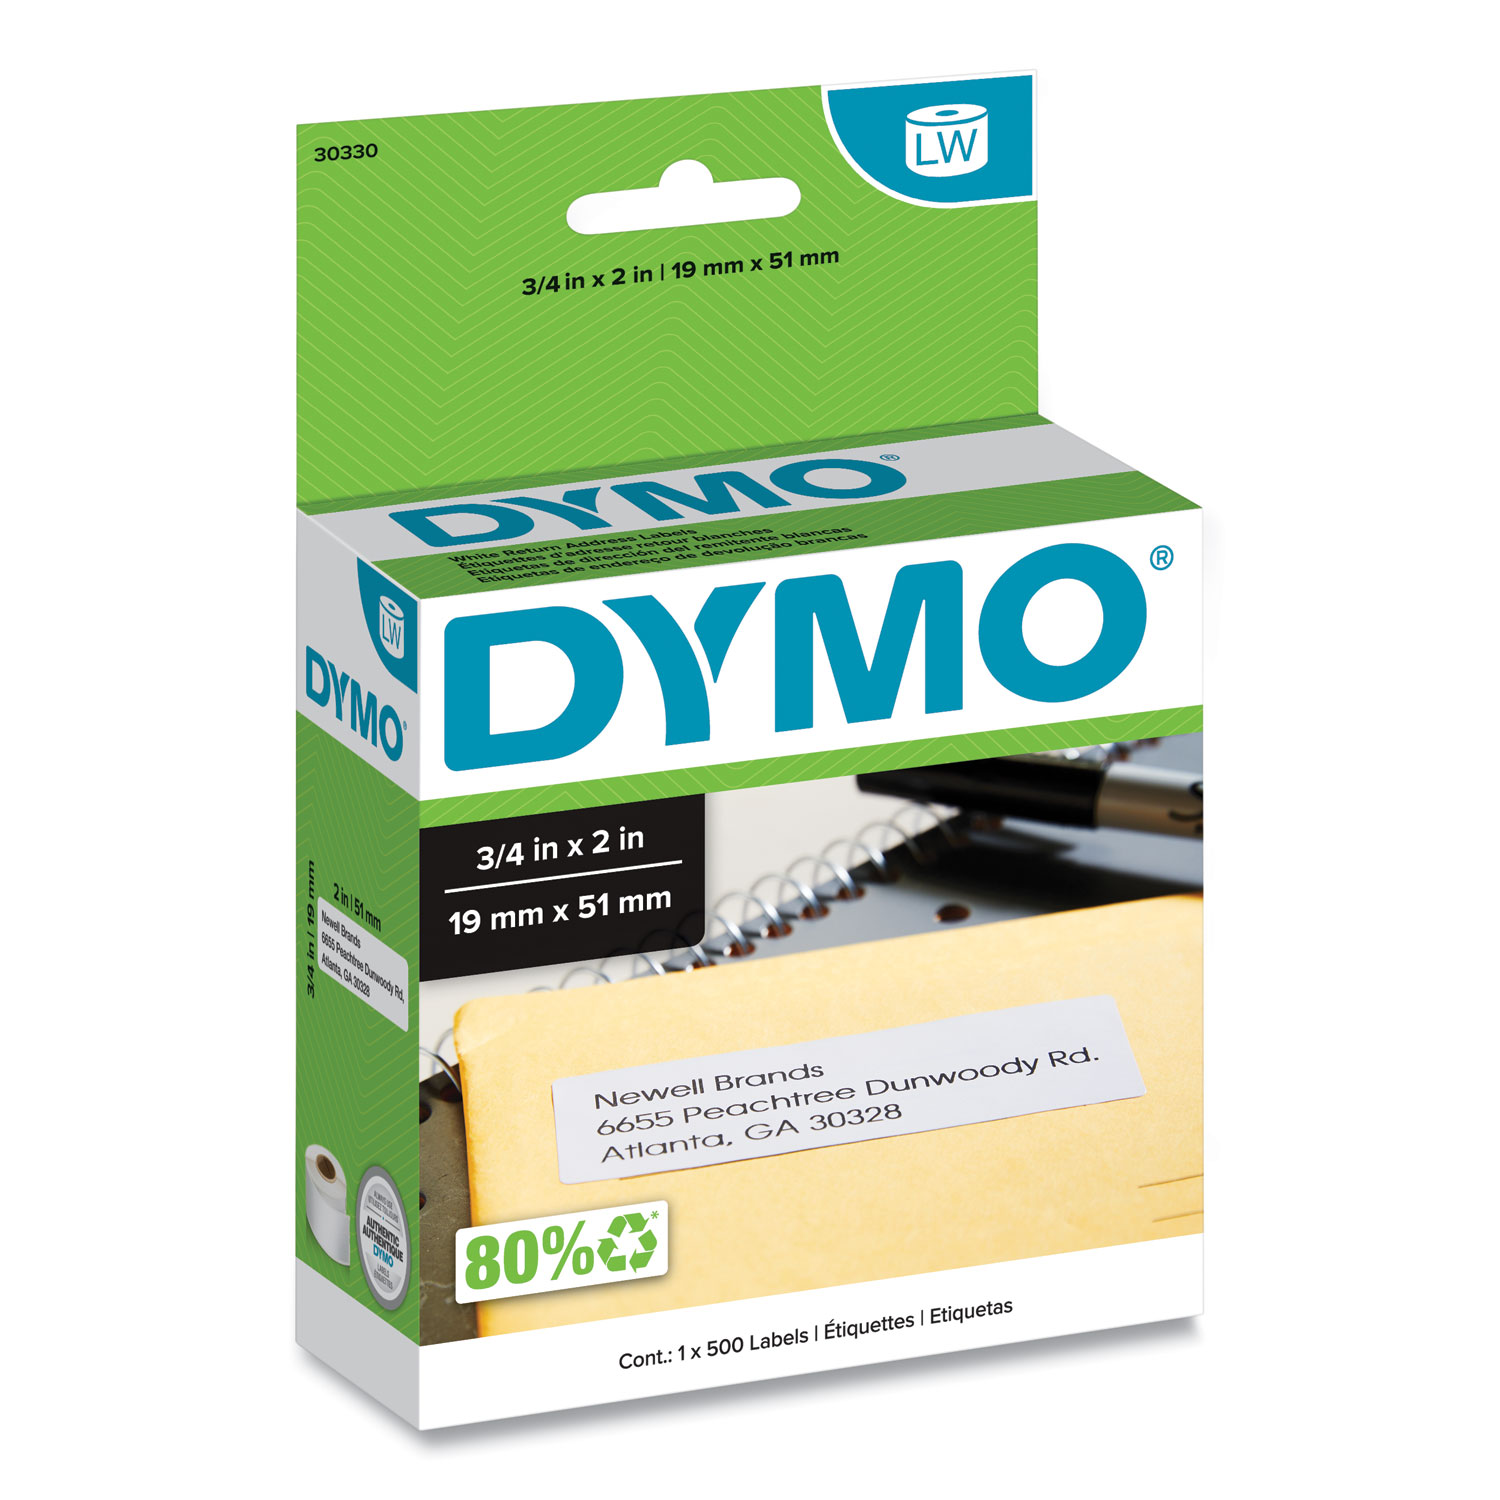 DYMO LabelWriter Mailing Address Labels